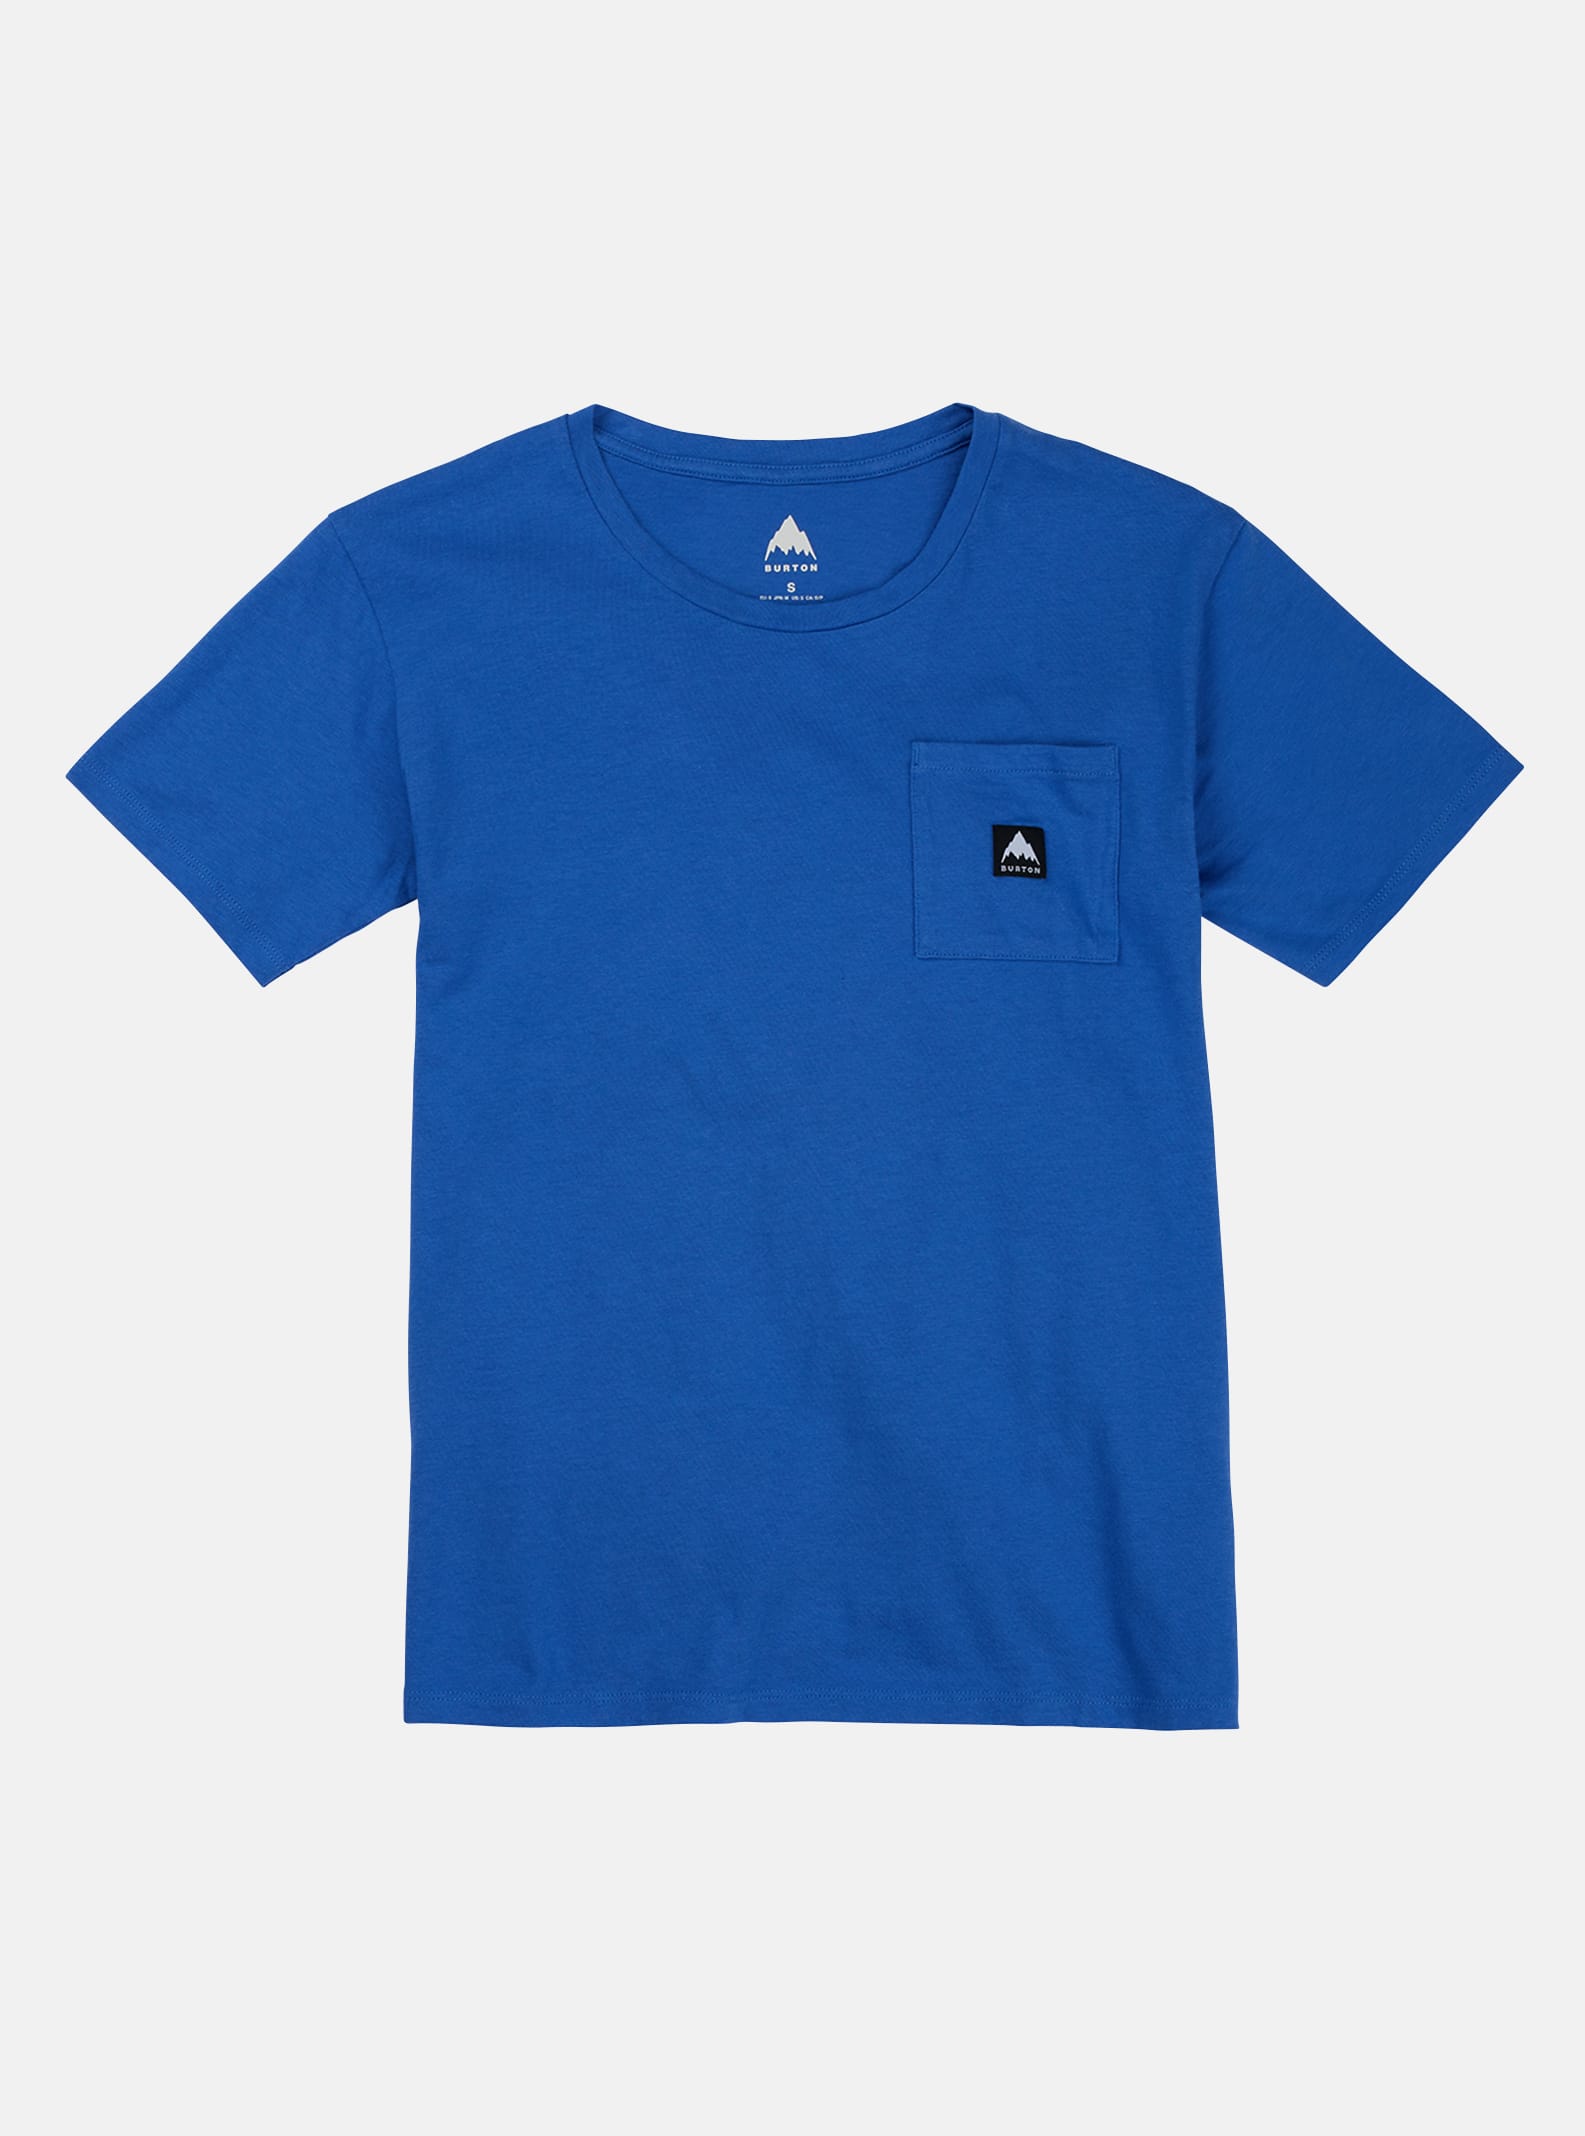 Burton Colfax kortärmad t-shirt för damer, Amparo Blue, XL